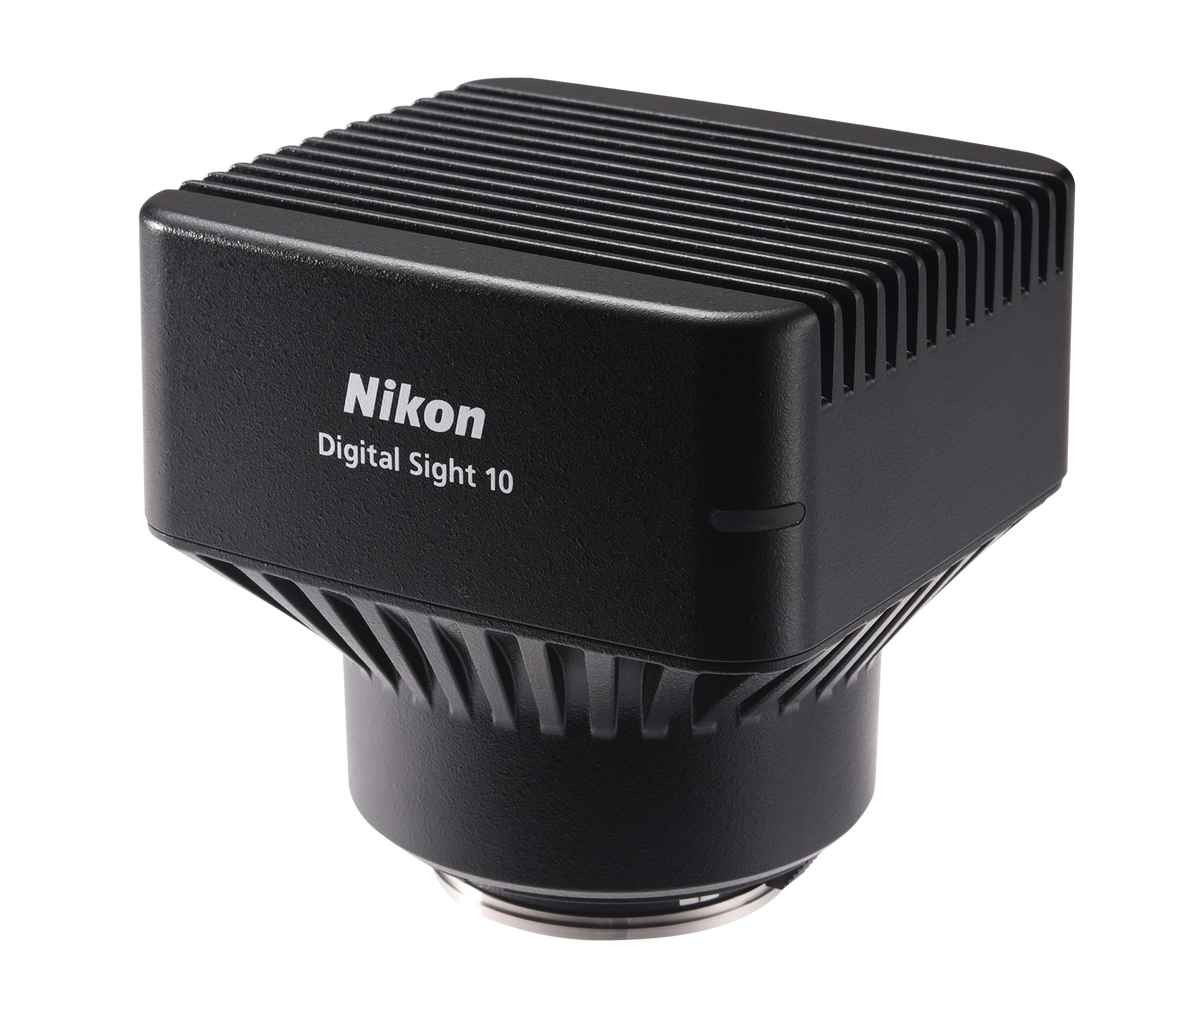 digital-sight-10_ec7d1033075031a0254a7350f4e87eb4.jpg - 【新品快訊】NIKON Digital Sight 10 雙模式（彩色 / 黑白）6K 高解析 CMOS 影像系統